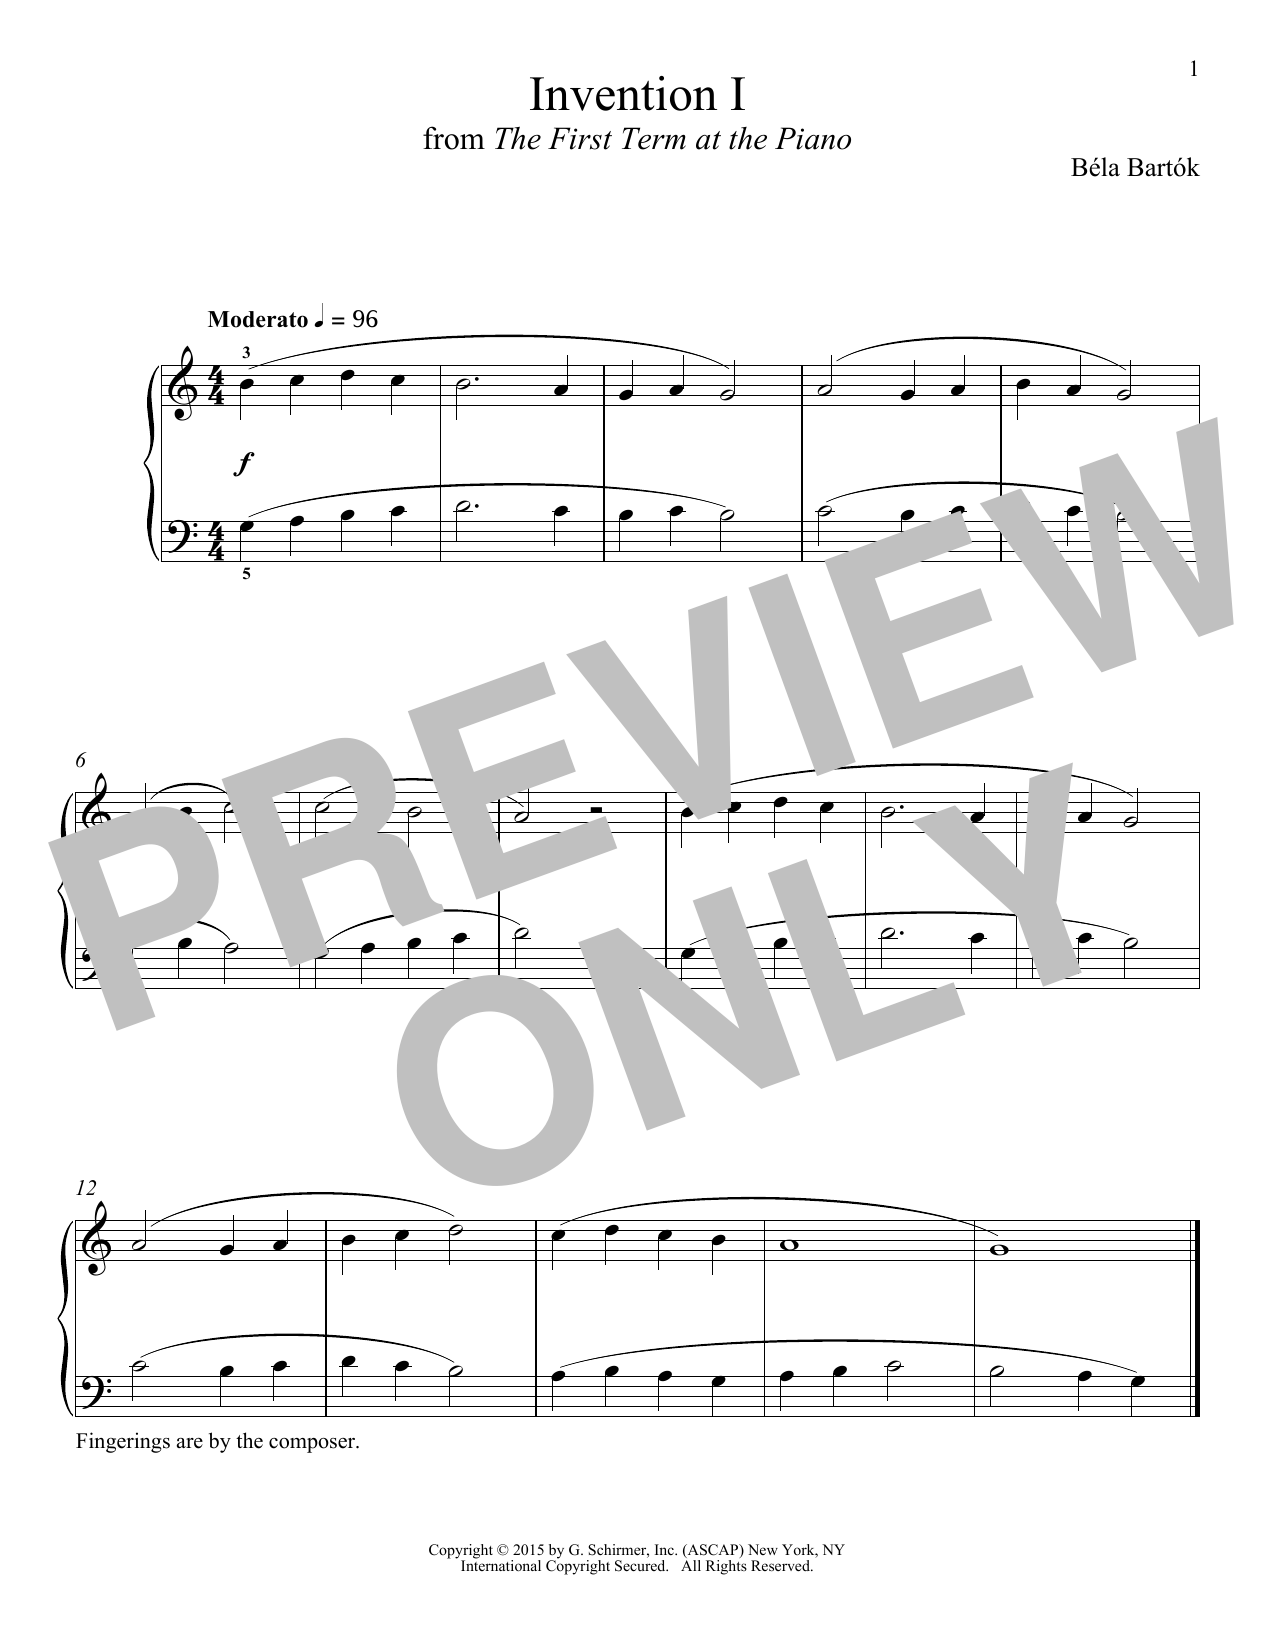 Download Bela Bartok Invention I Sheet Music